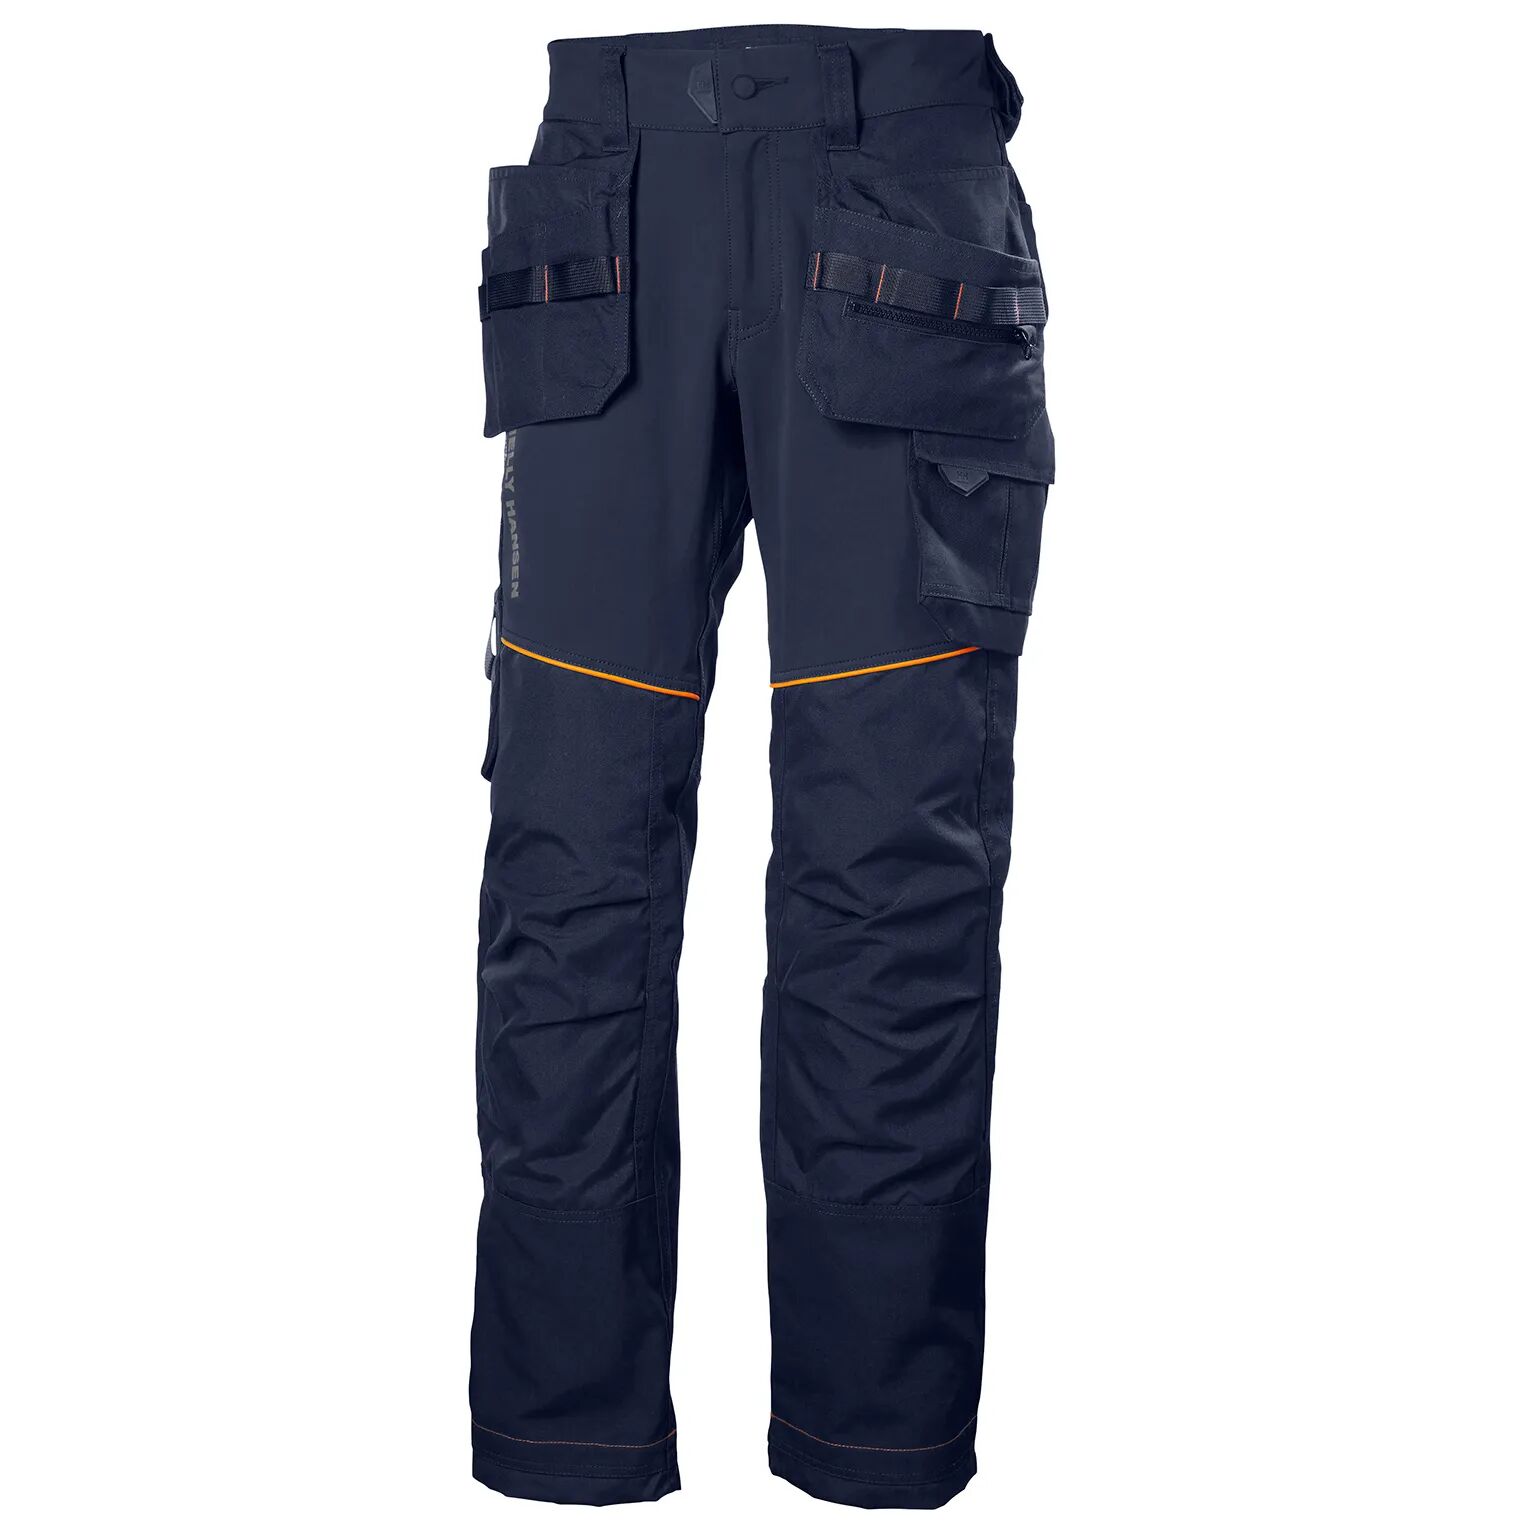 HH Workwear Helly Hansen WorkwearChelsea Evolution Construction Pants Navy 30/30